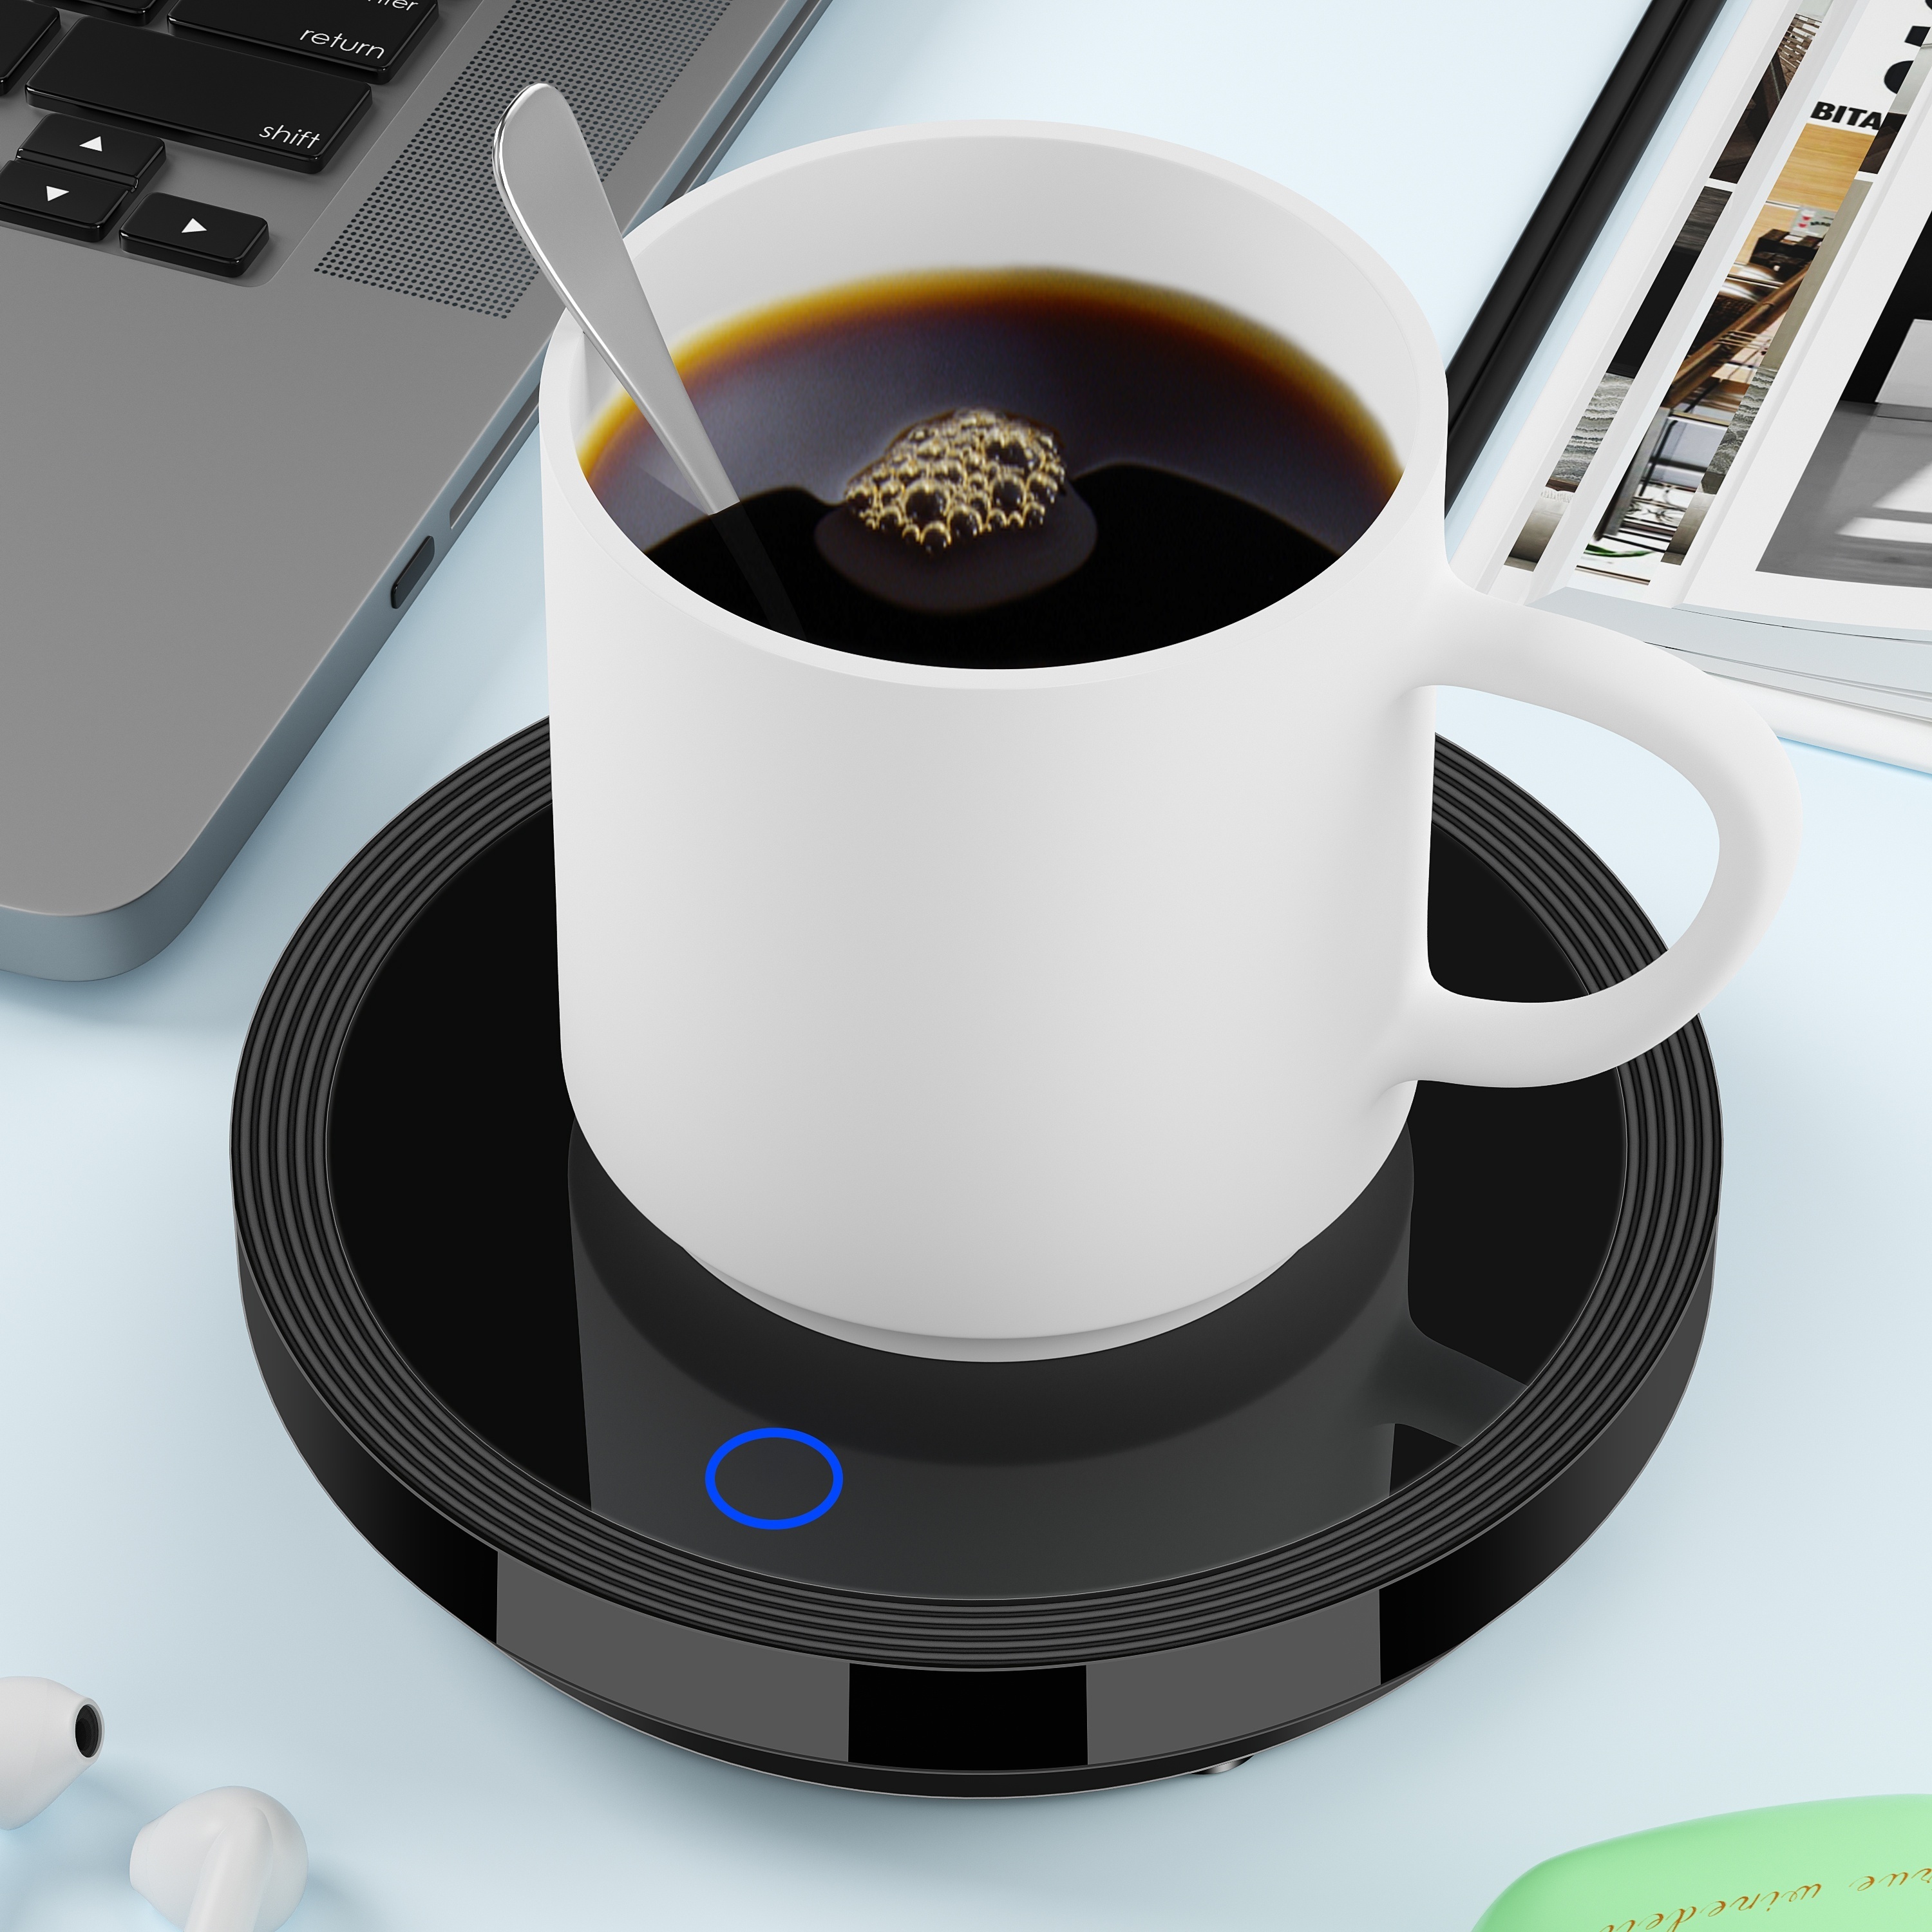 Coffee Mug Cup Warmer for Office Home Desk Use Cocoa Tea Water